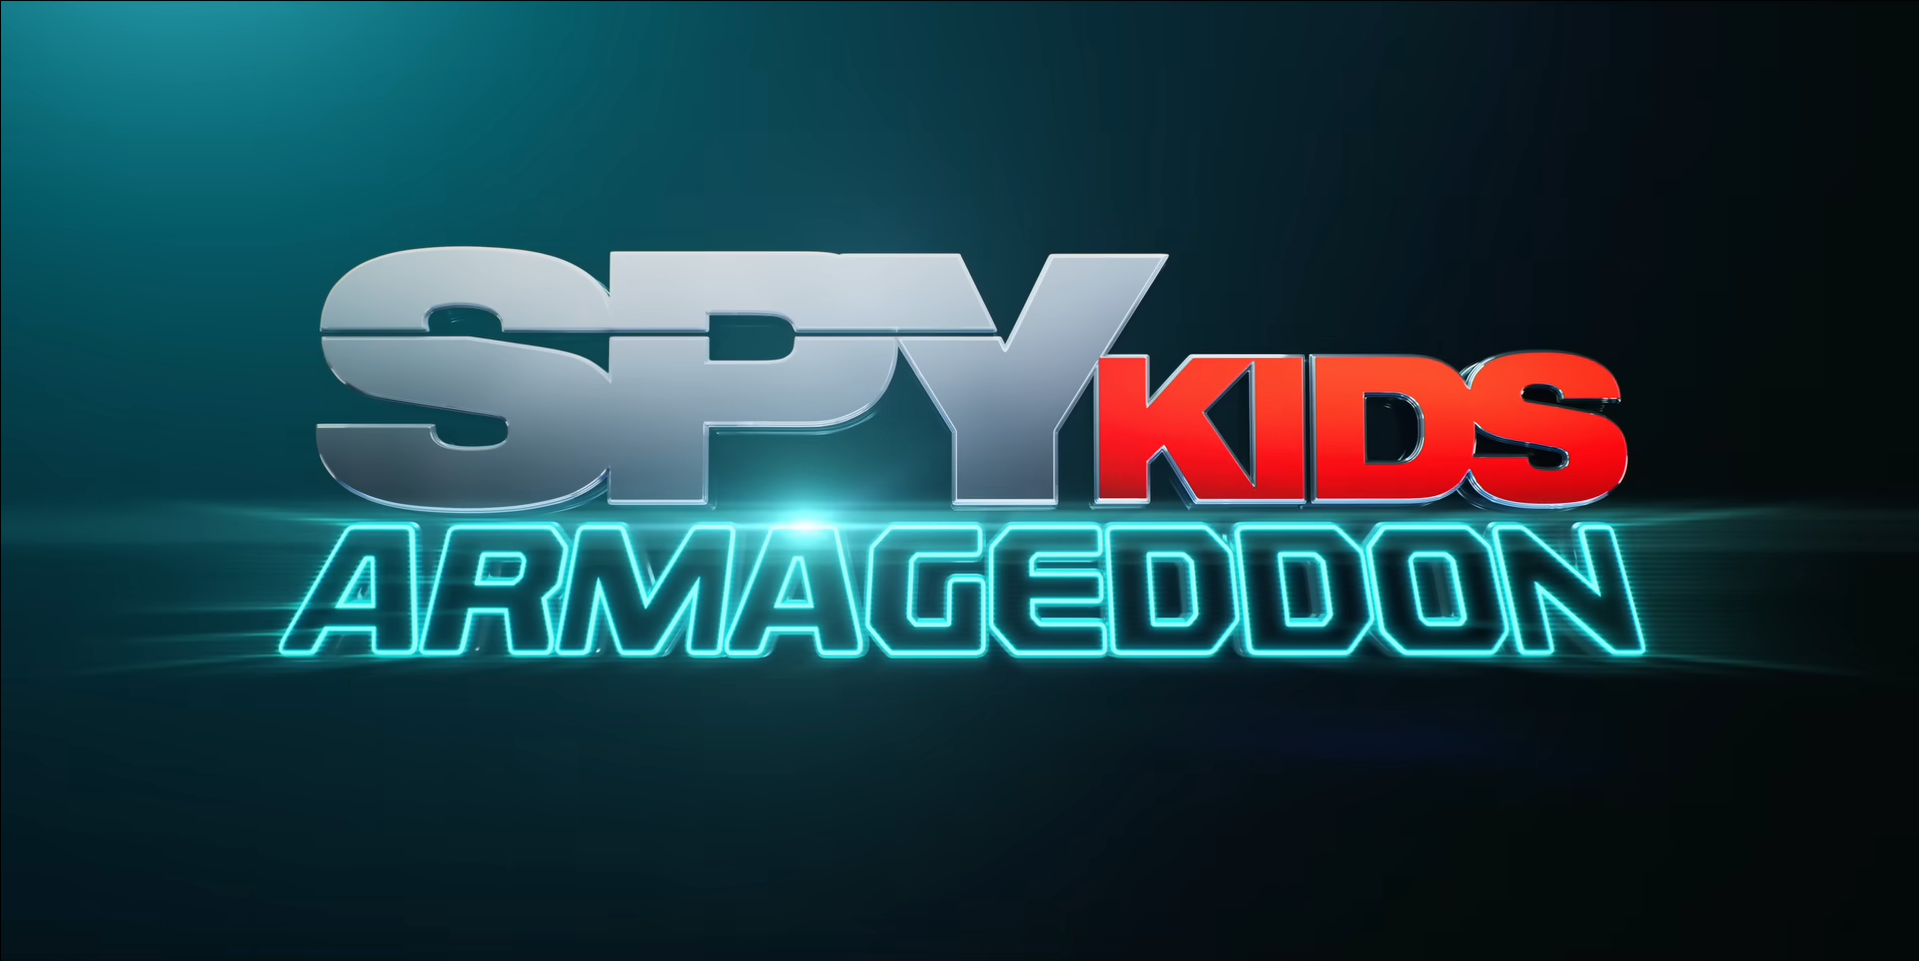 spy kids armaggedon release